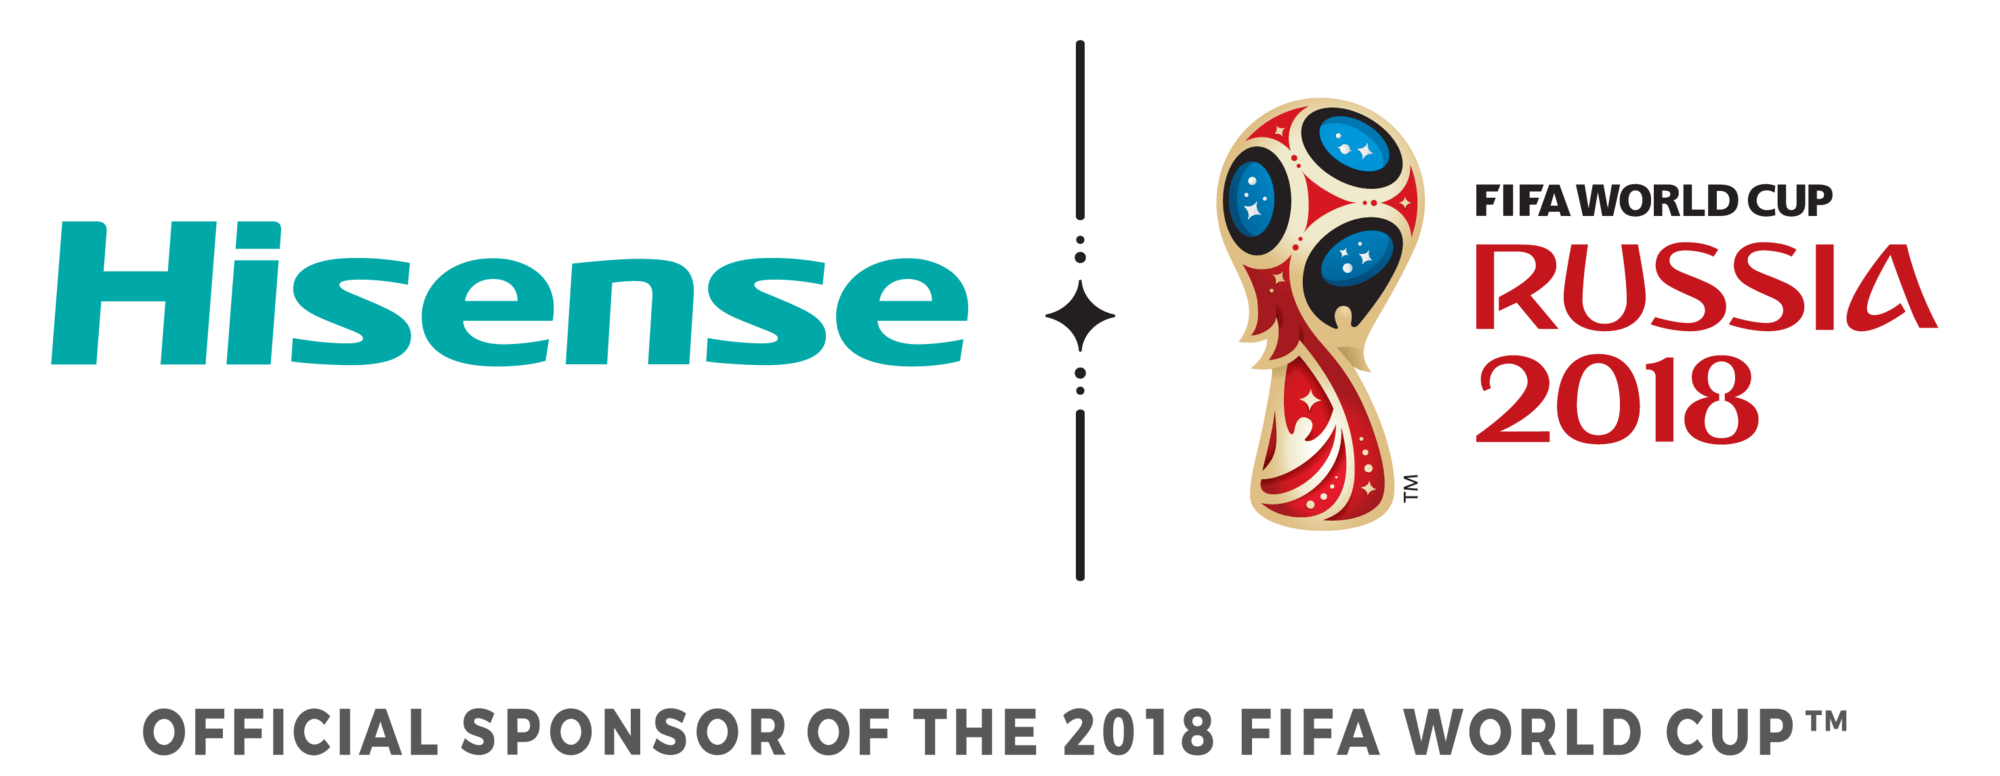 Hisense Logo - Hisense